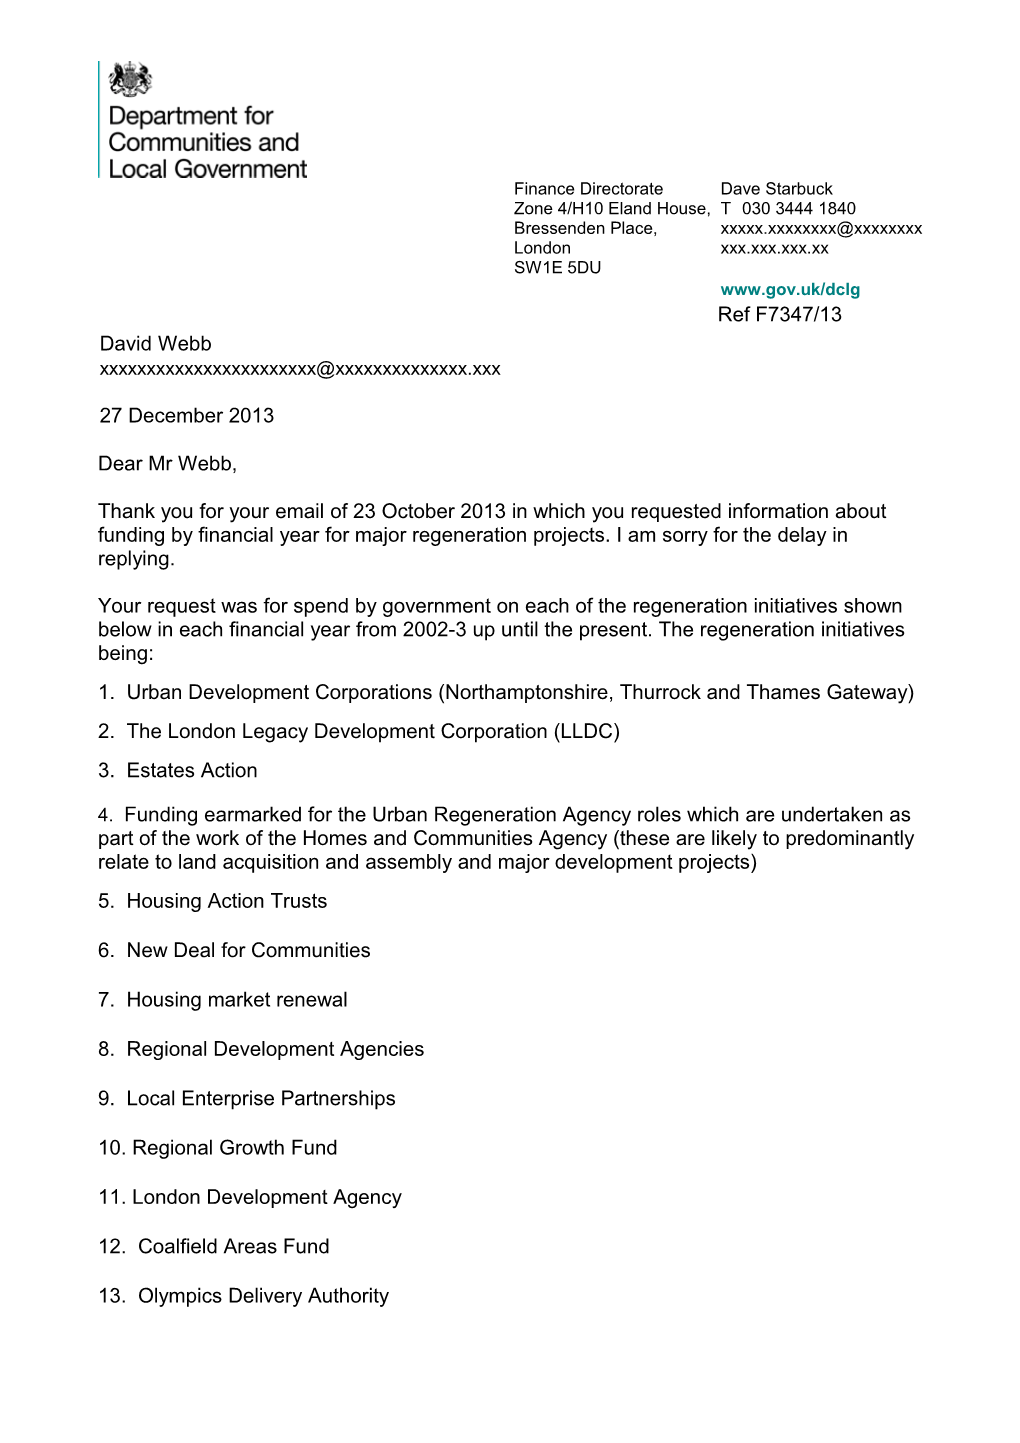 1. Urban Development Corporations (Northamptonshire, Thurrock and Thames Gateway)